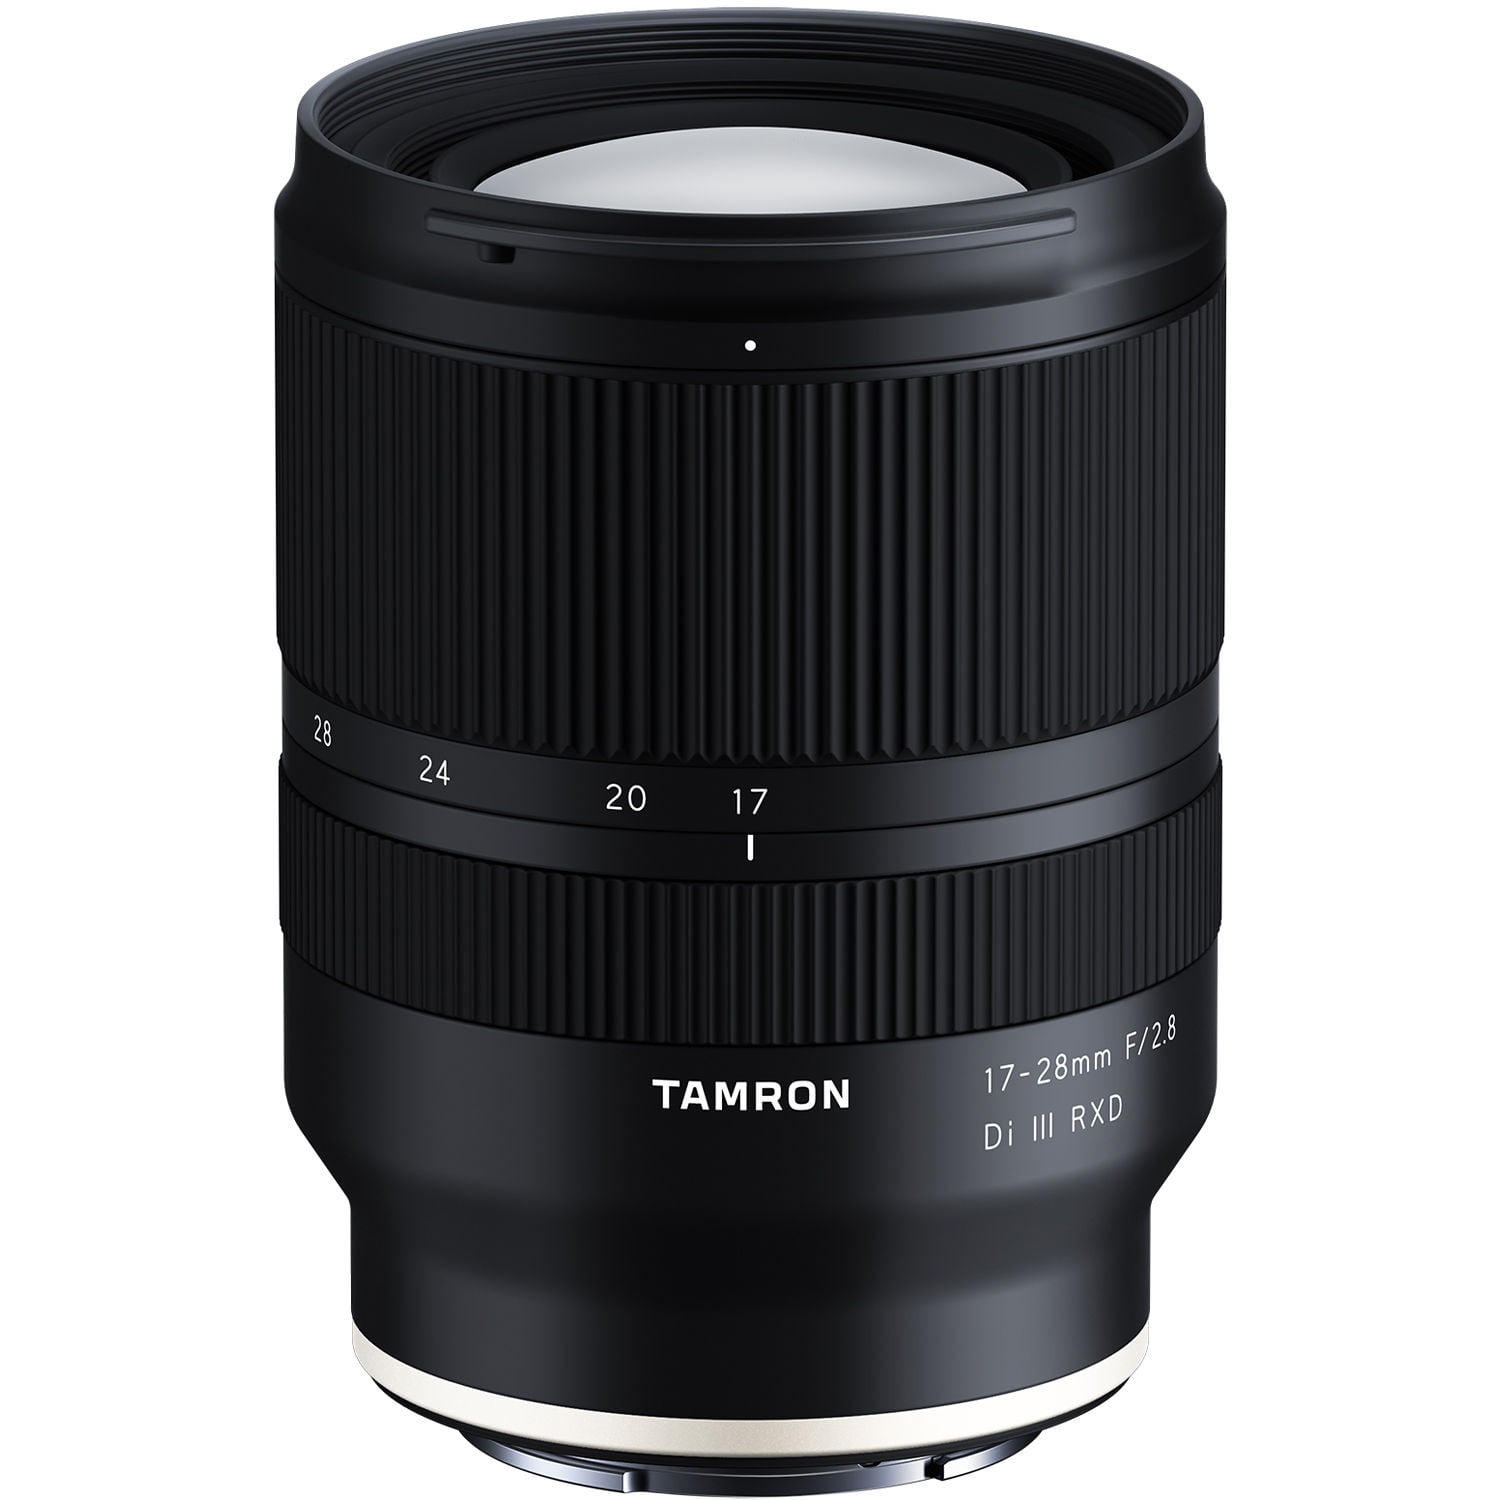 Tamron 17-28mm f2.8 for Sony E Di III RXD – Apex Digital